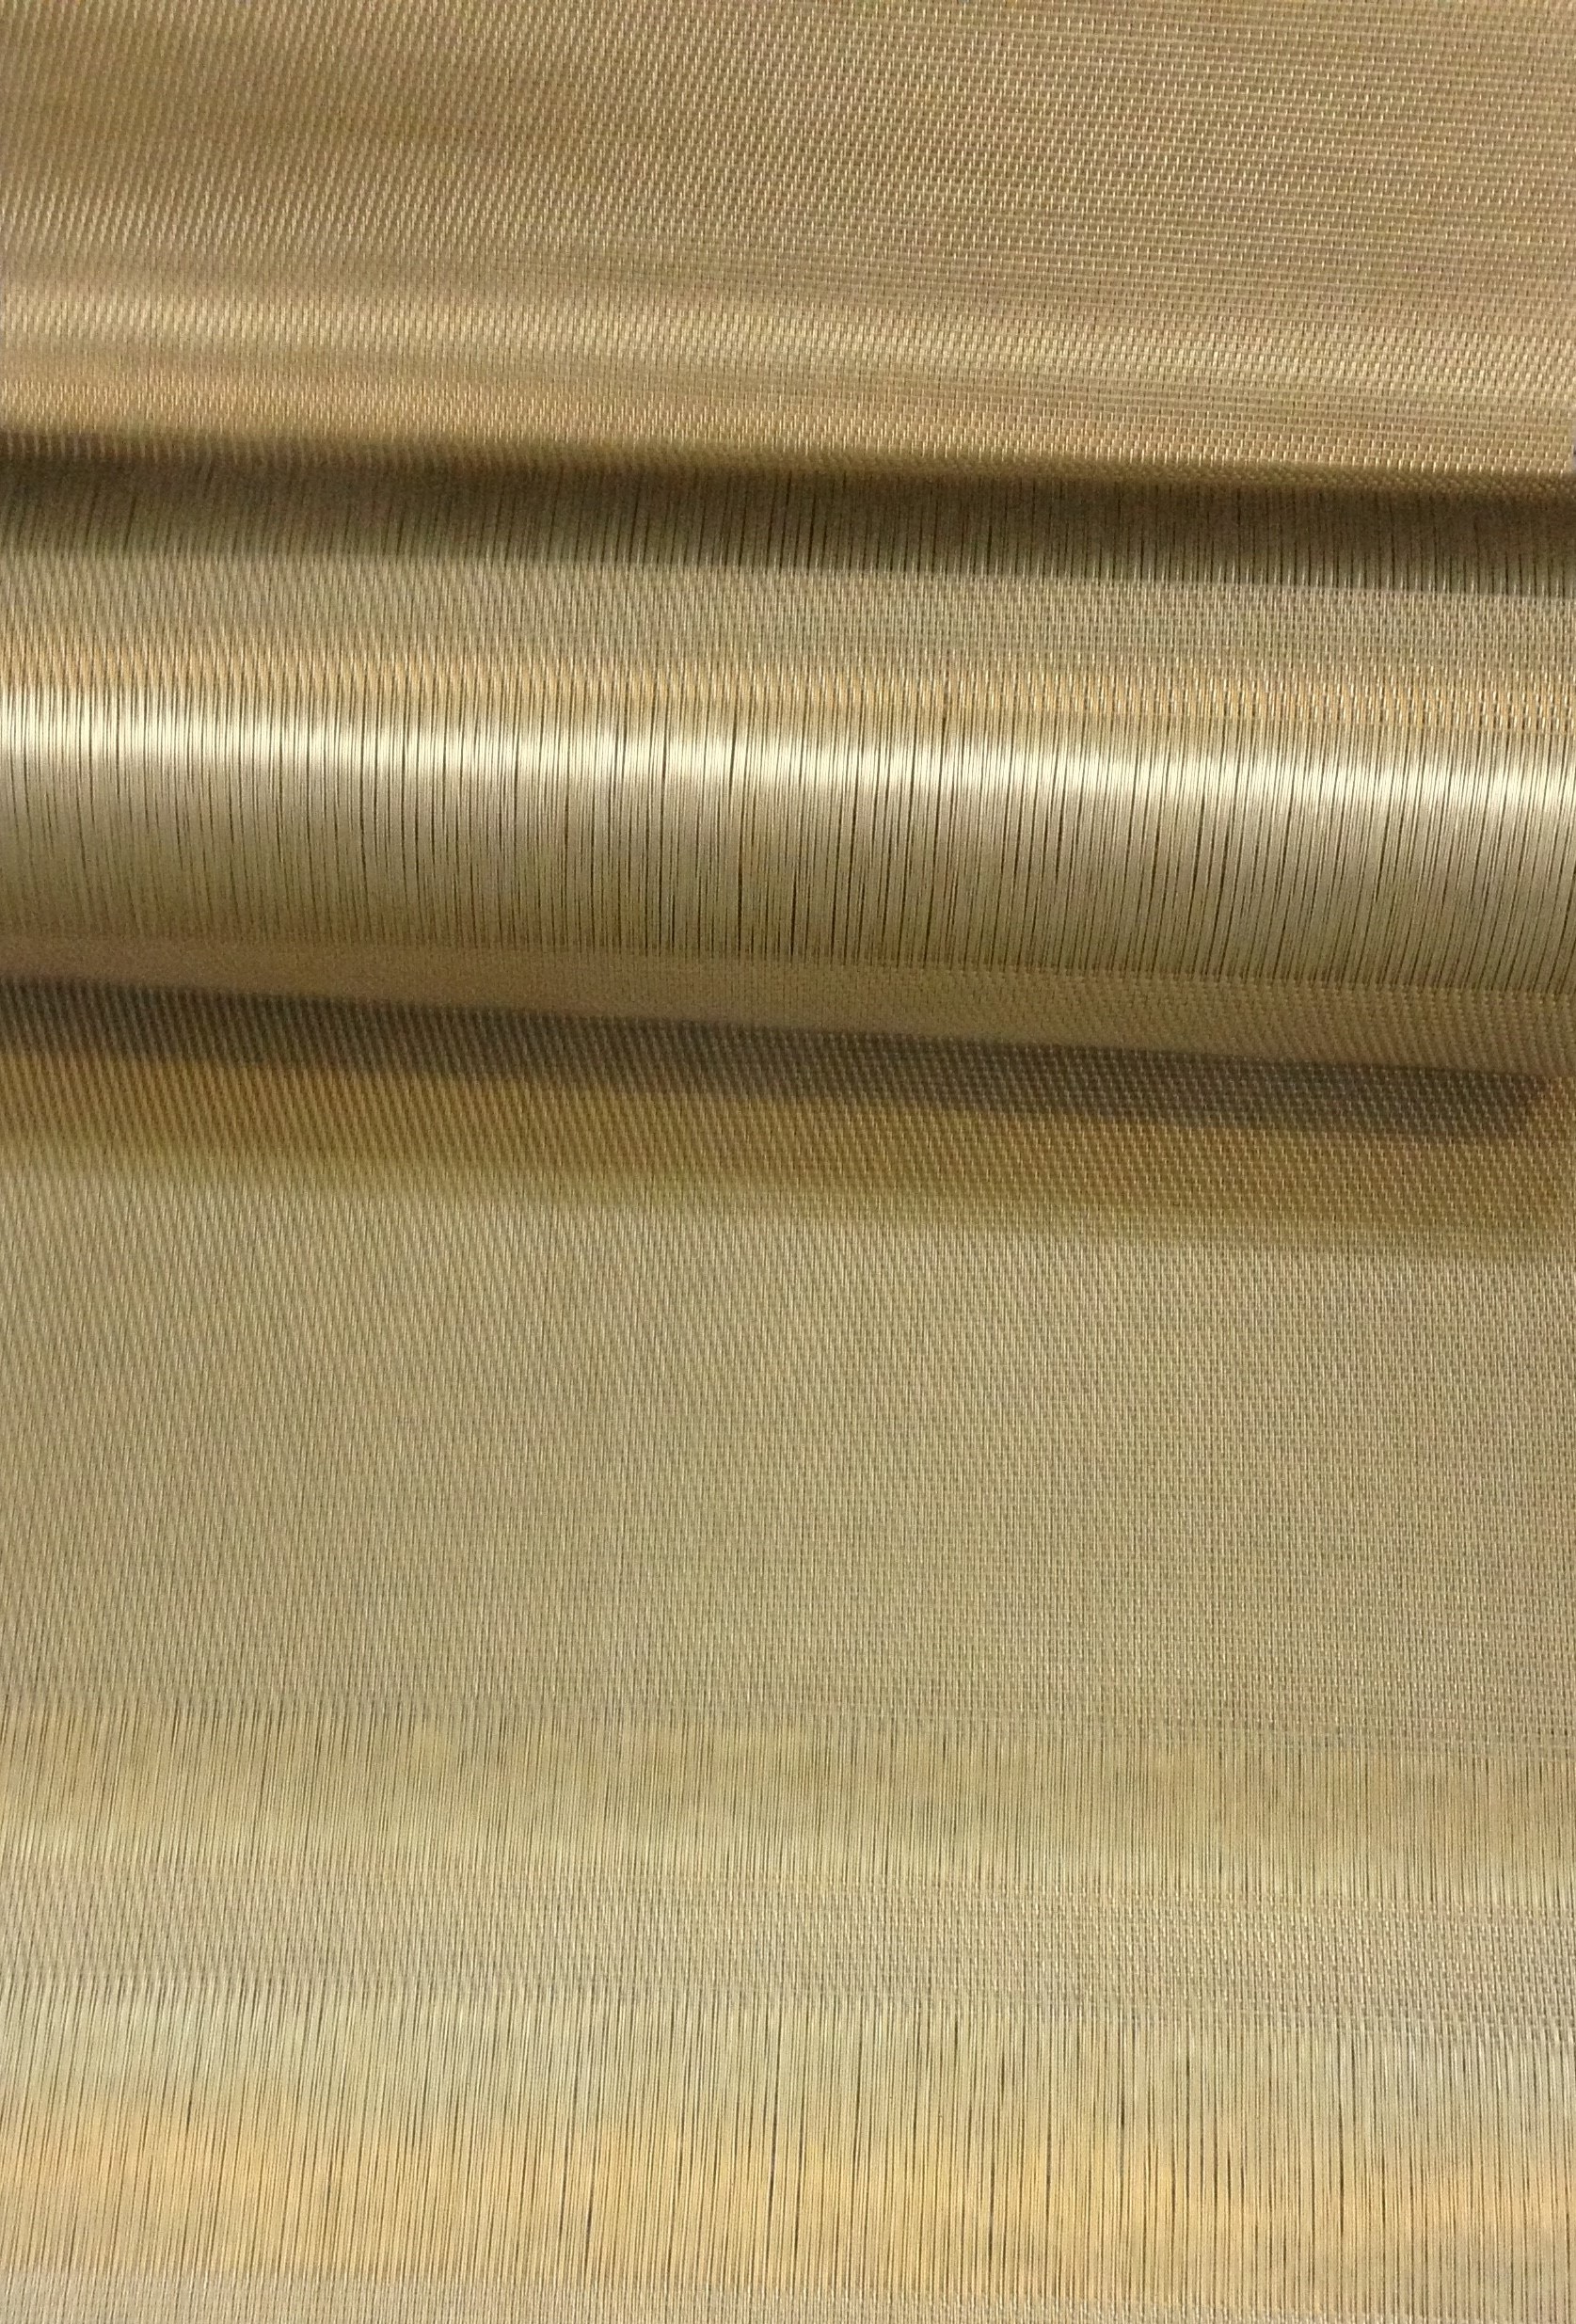 Camino de mesa tuxedo stripe oro rectangular 36 x 193 cm - Chilewich